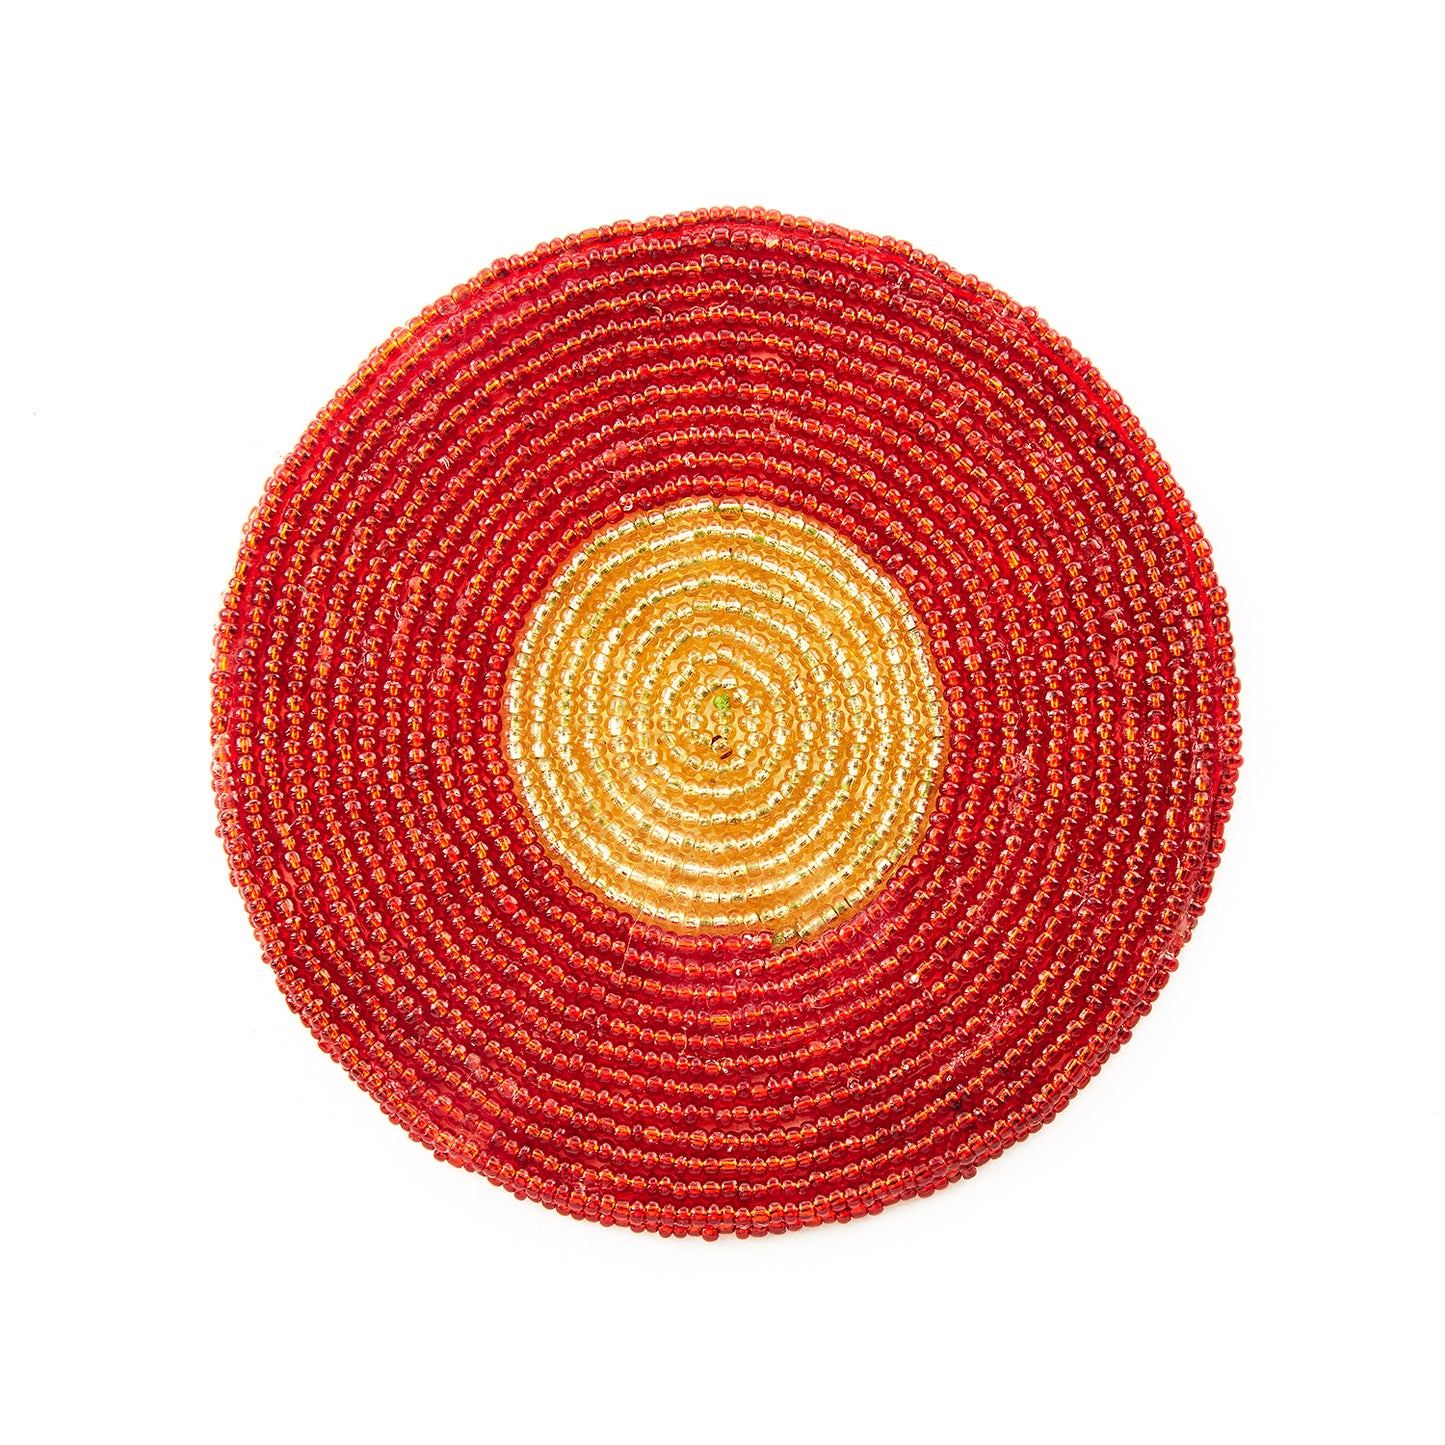 Crimson Red & Saffron Yellow - Bead Coaster